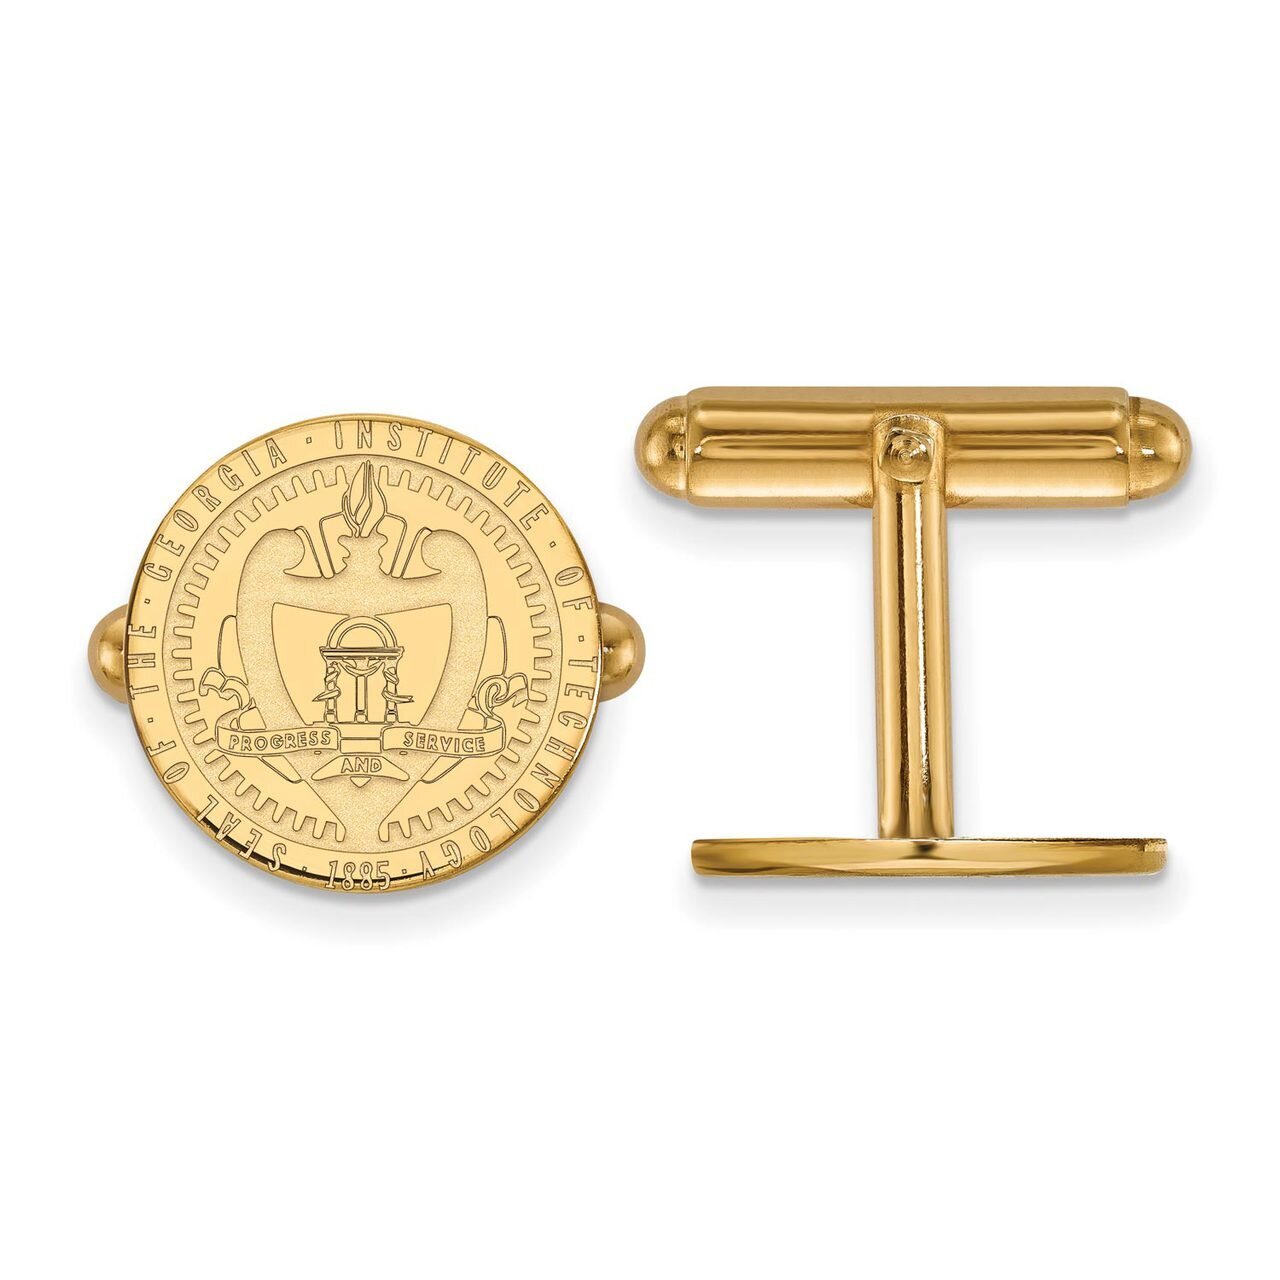 Georgia Institute of Technology Crest Cufflinks 14k Yellow Gold 4Y058GT